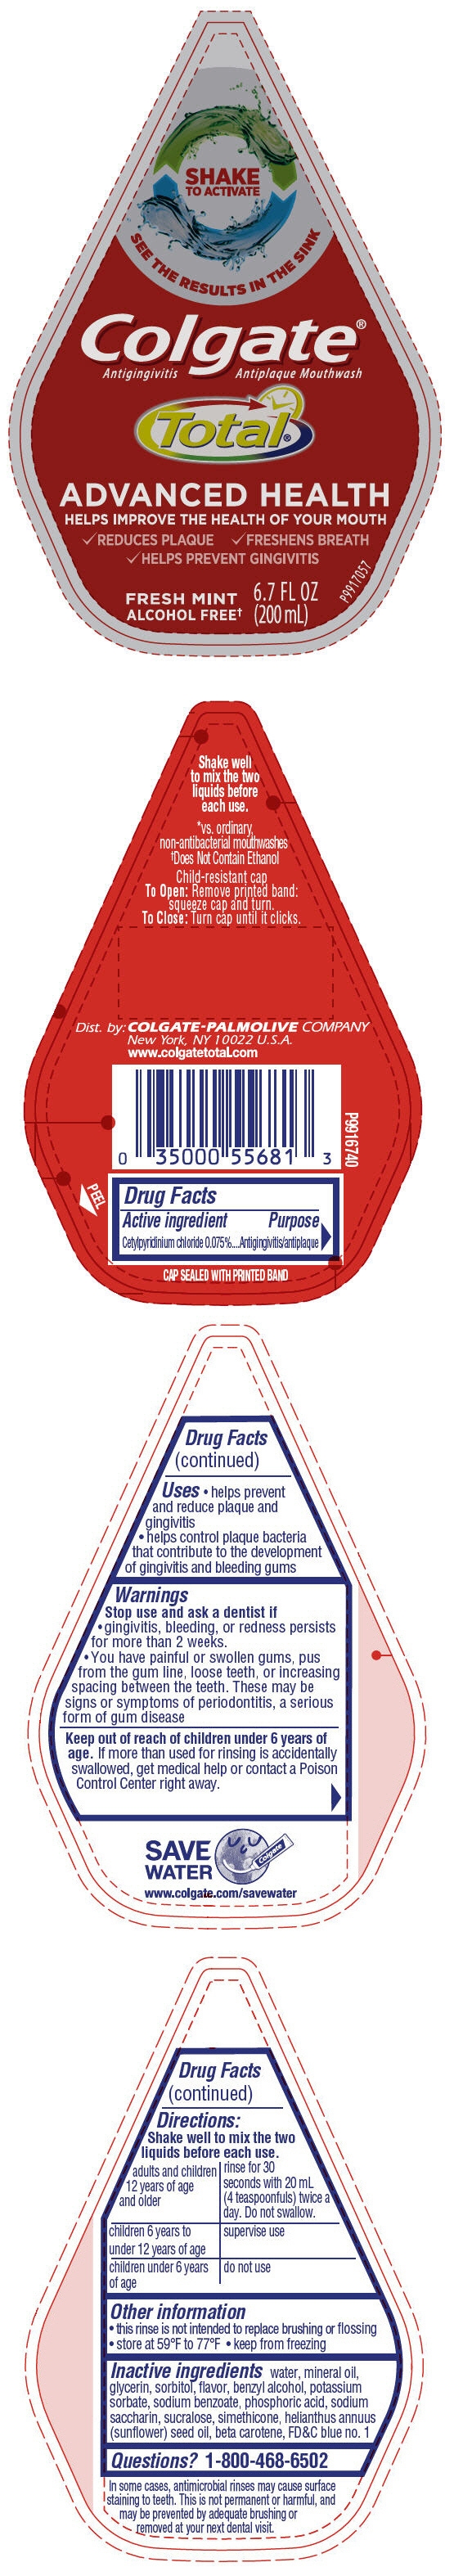 PRINCIPAL DISPLAY PANEL - 200 mL Bottle Label